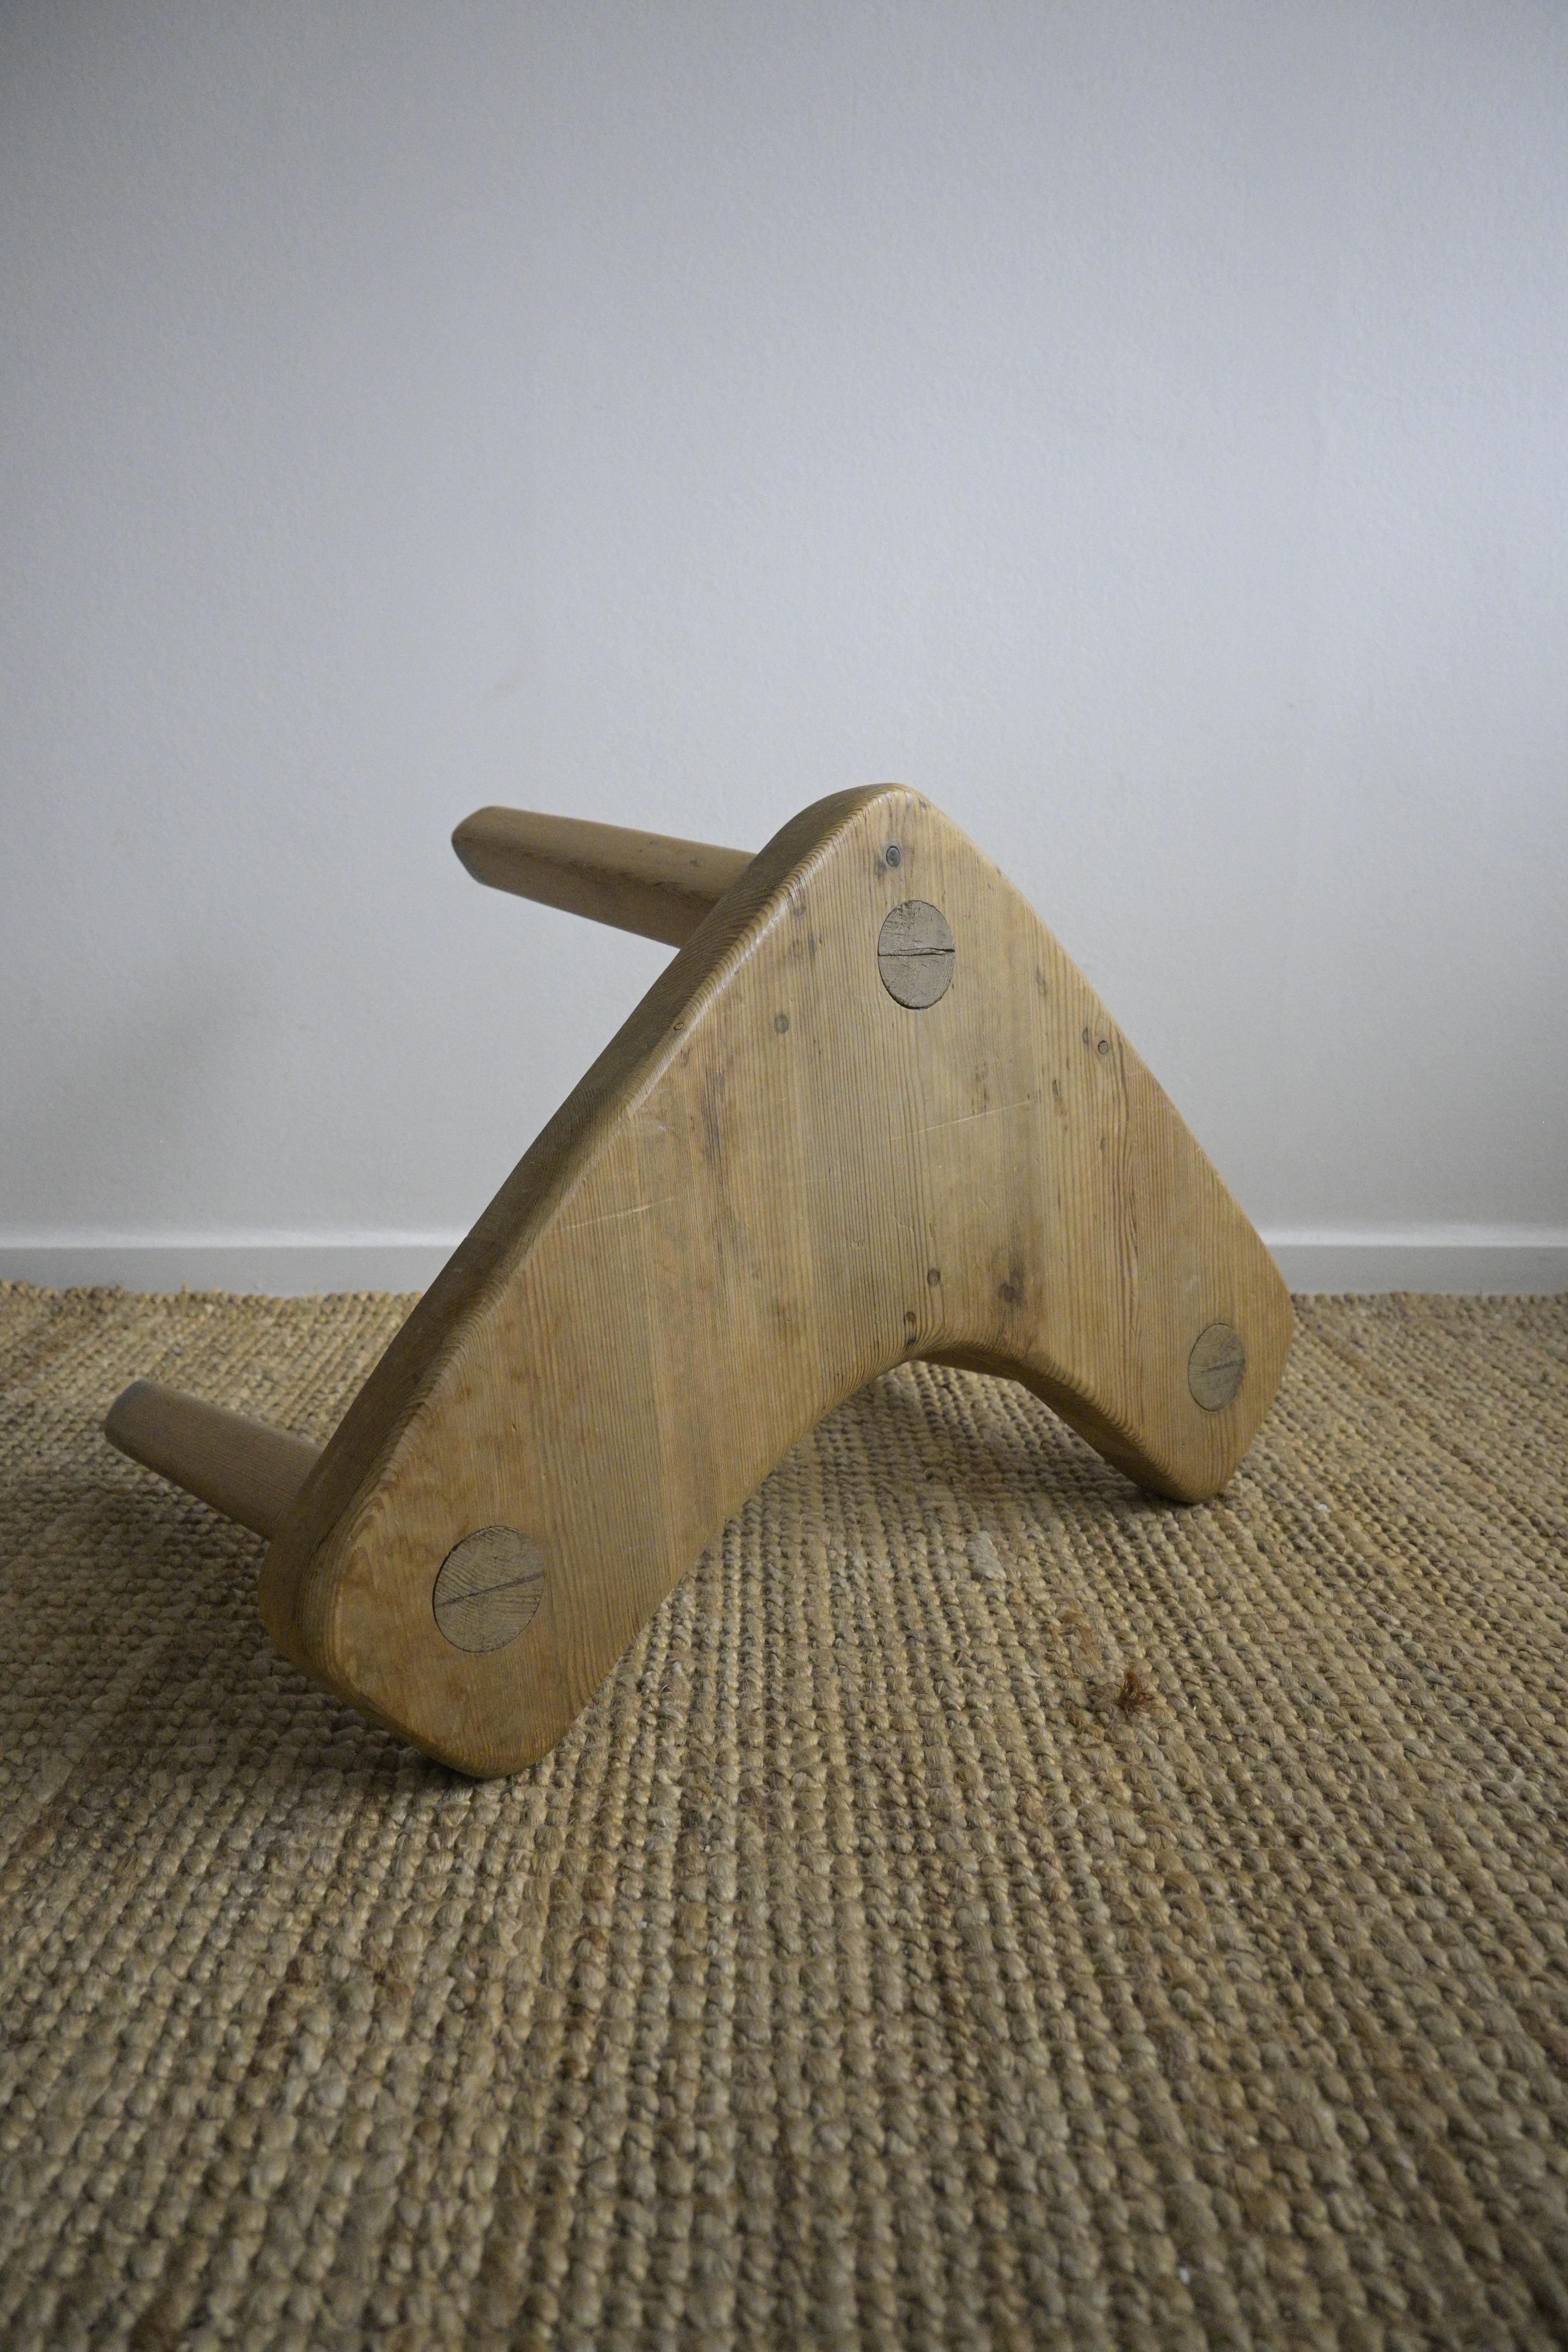 Unsymmetric Pine Stool or Side Table by Stig Sandqvist, Vemdalen, Sweden 1950s For Sale 3